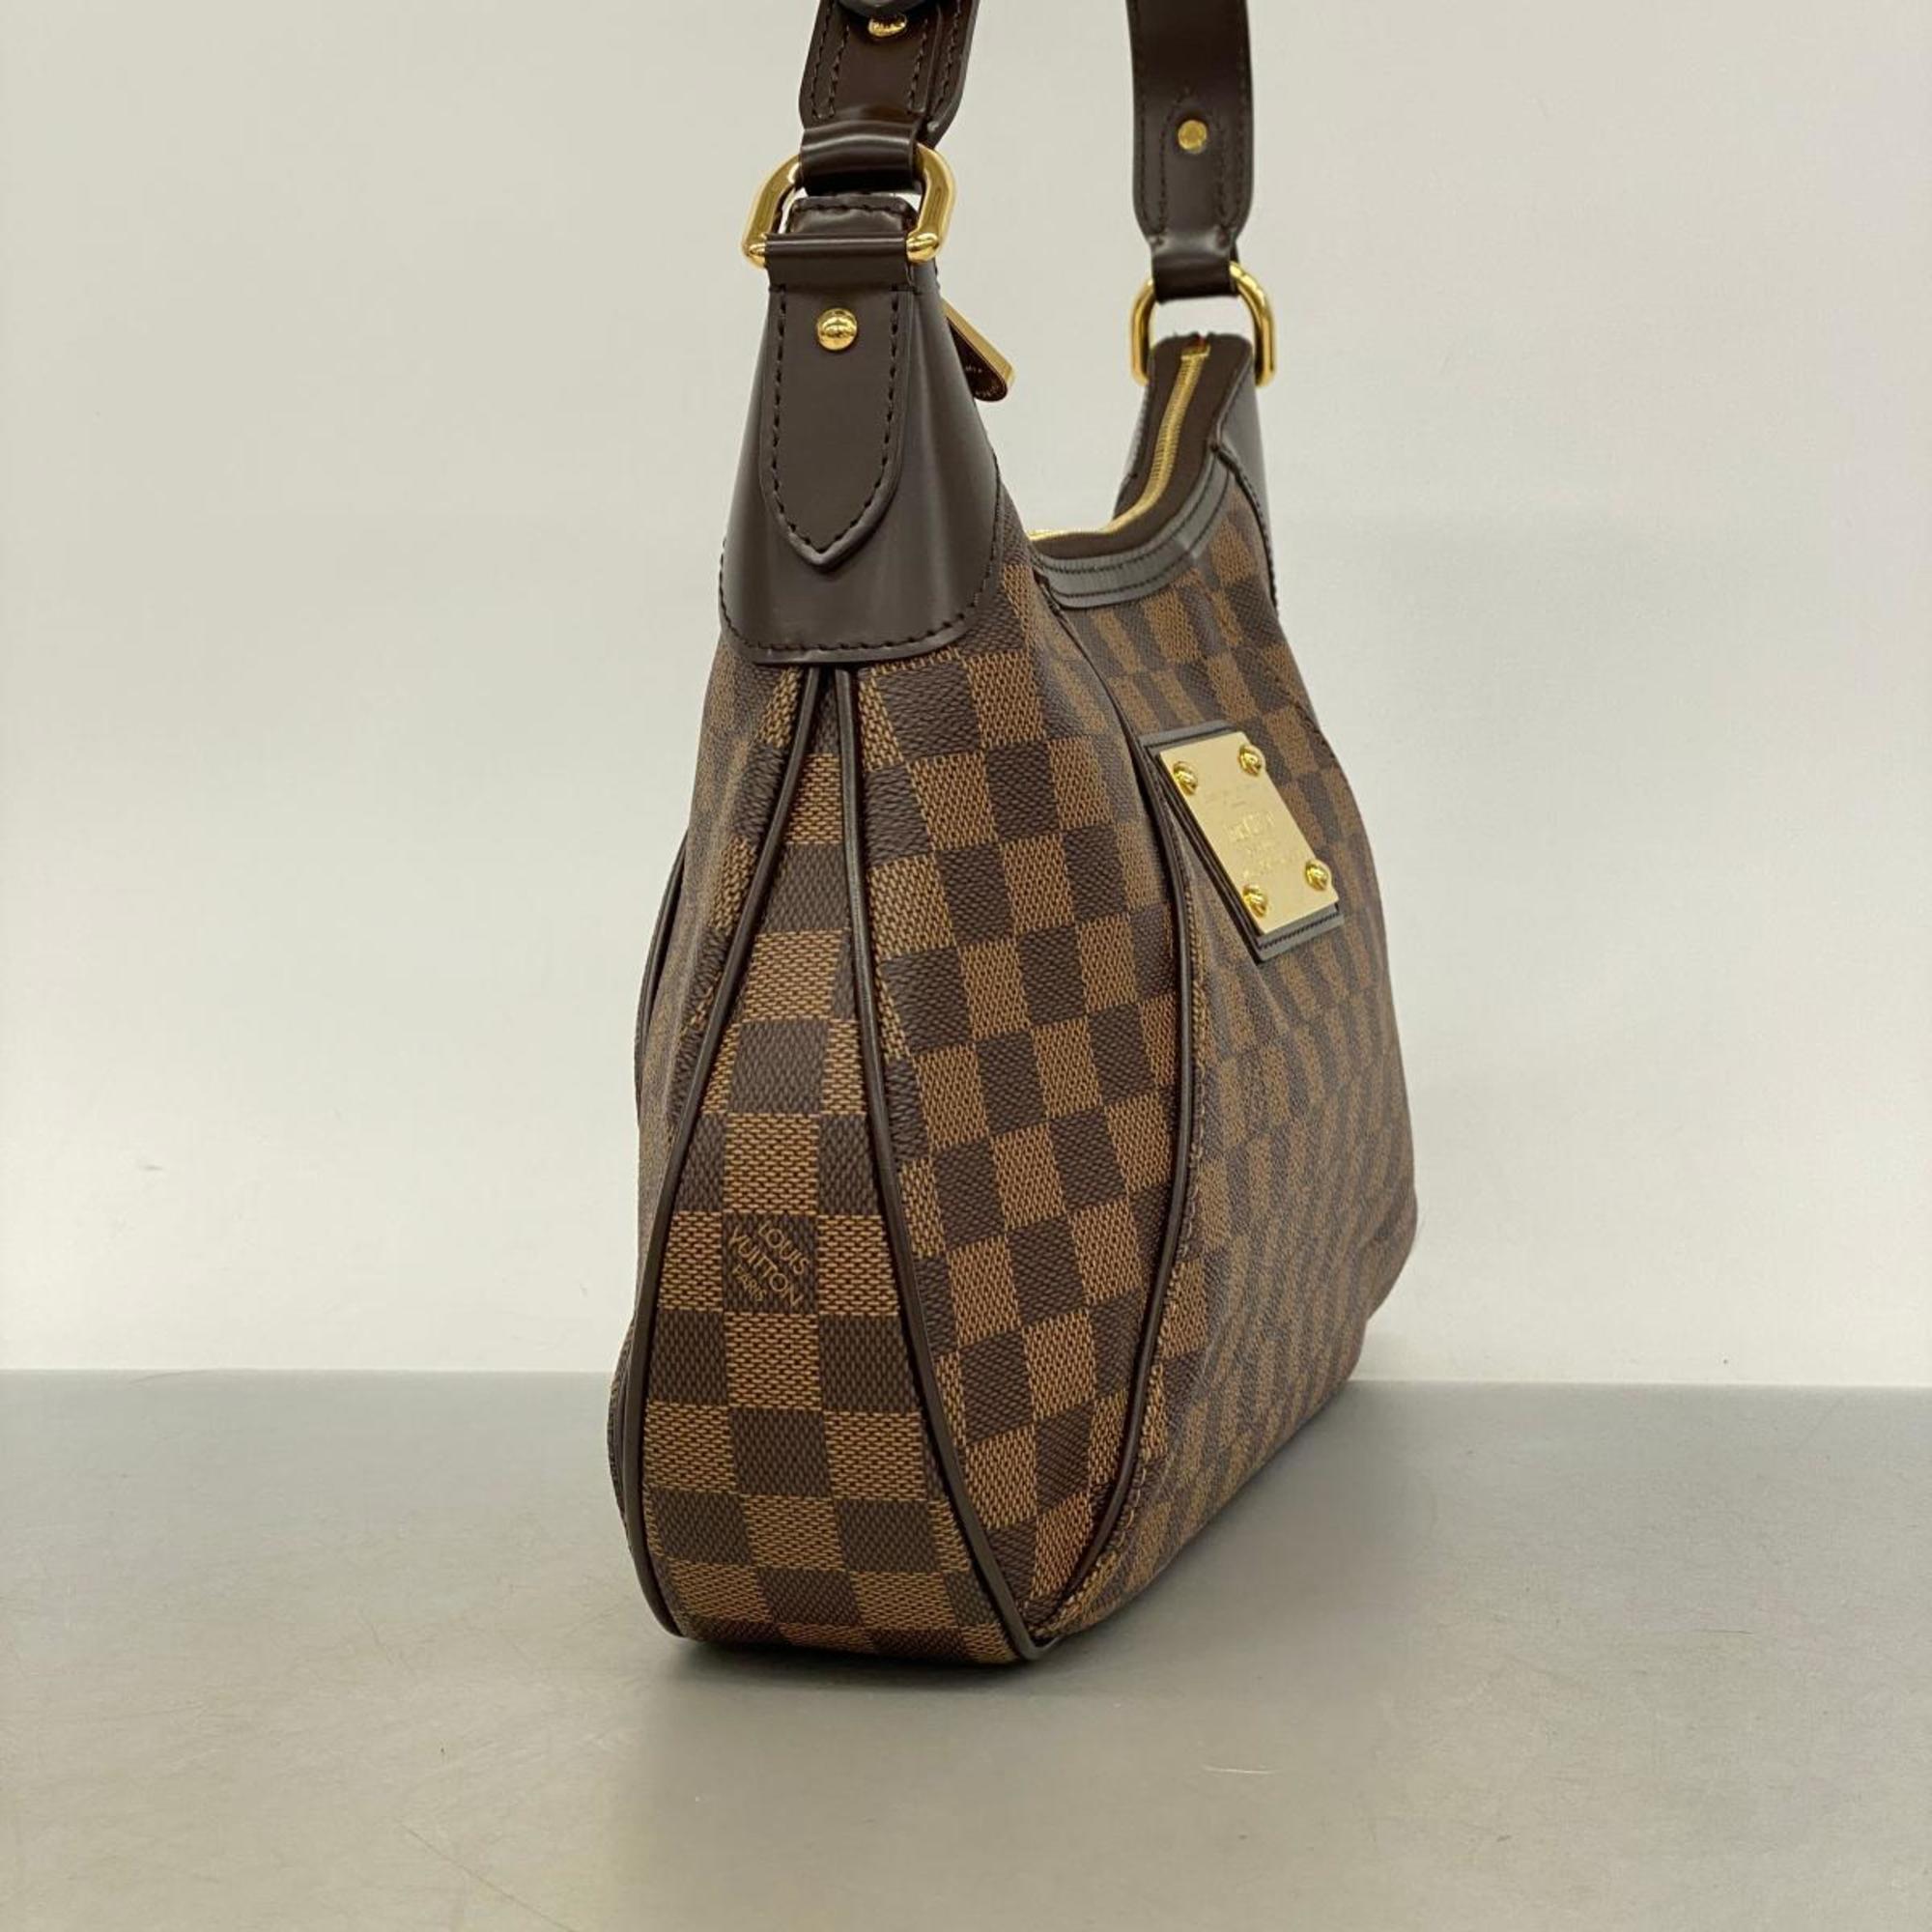 Louis Vuitton Shoulder Bag Damier Thames GM N48181 Ebene Ladies